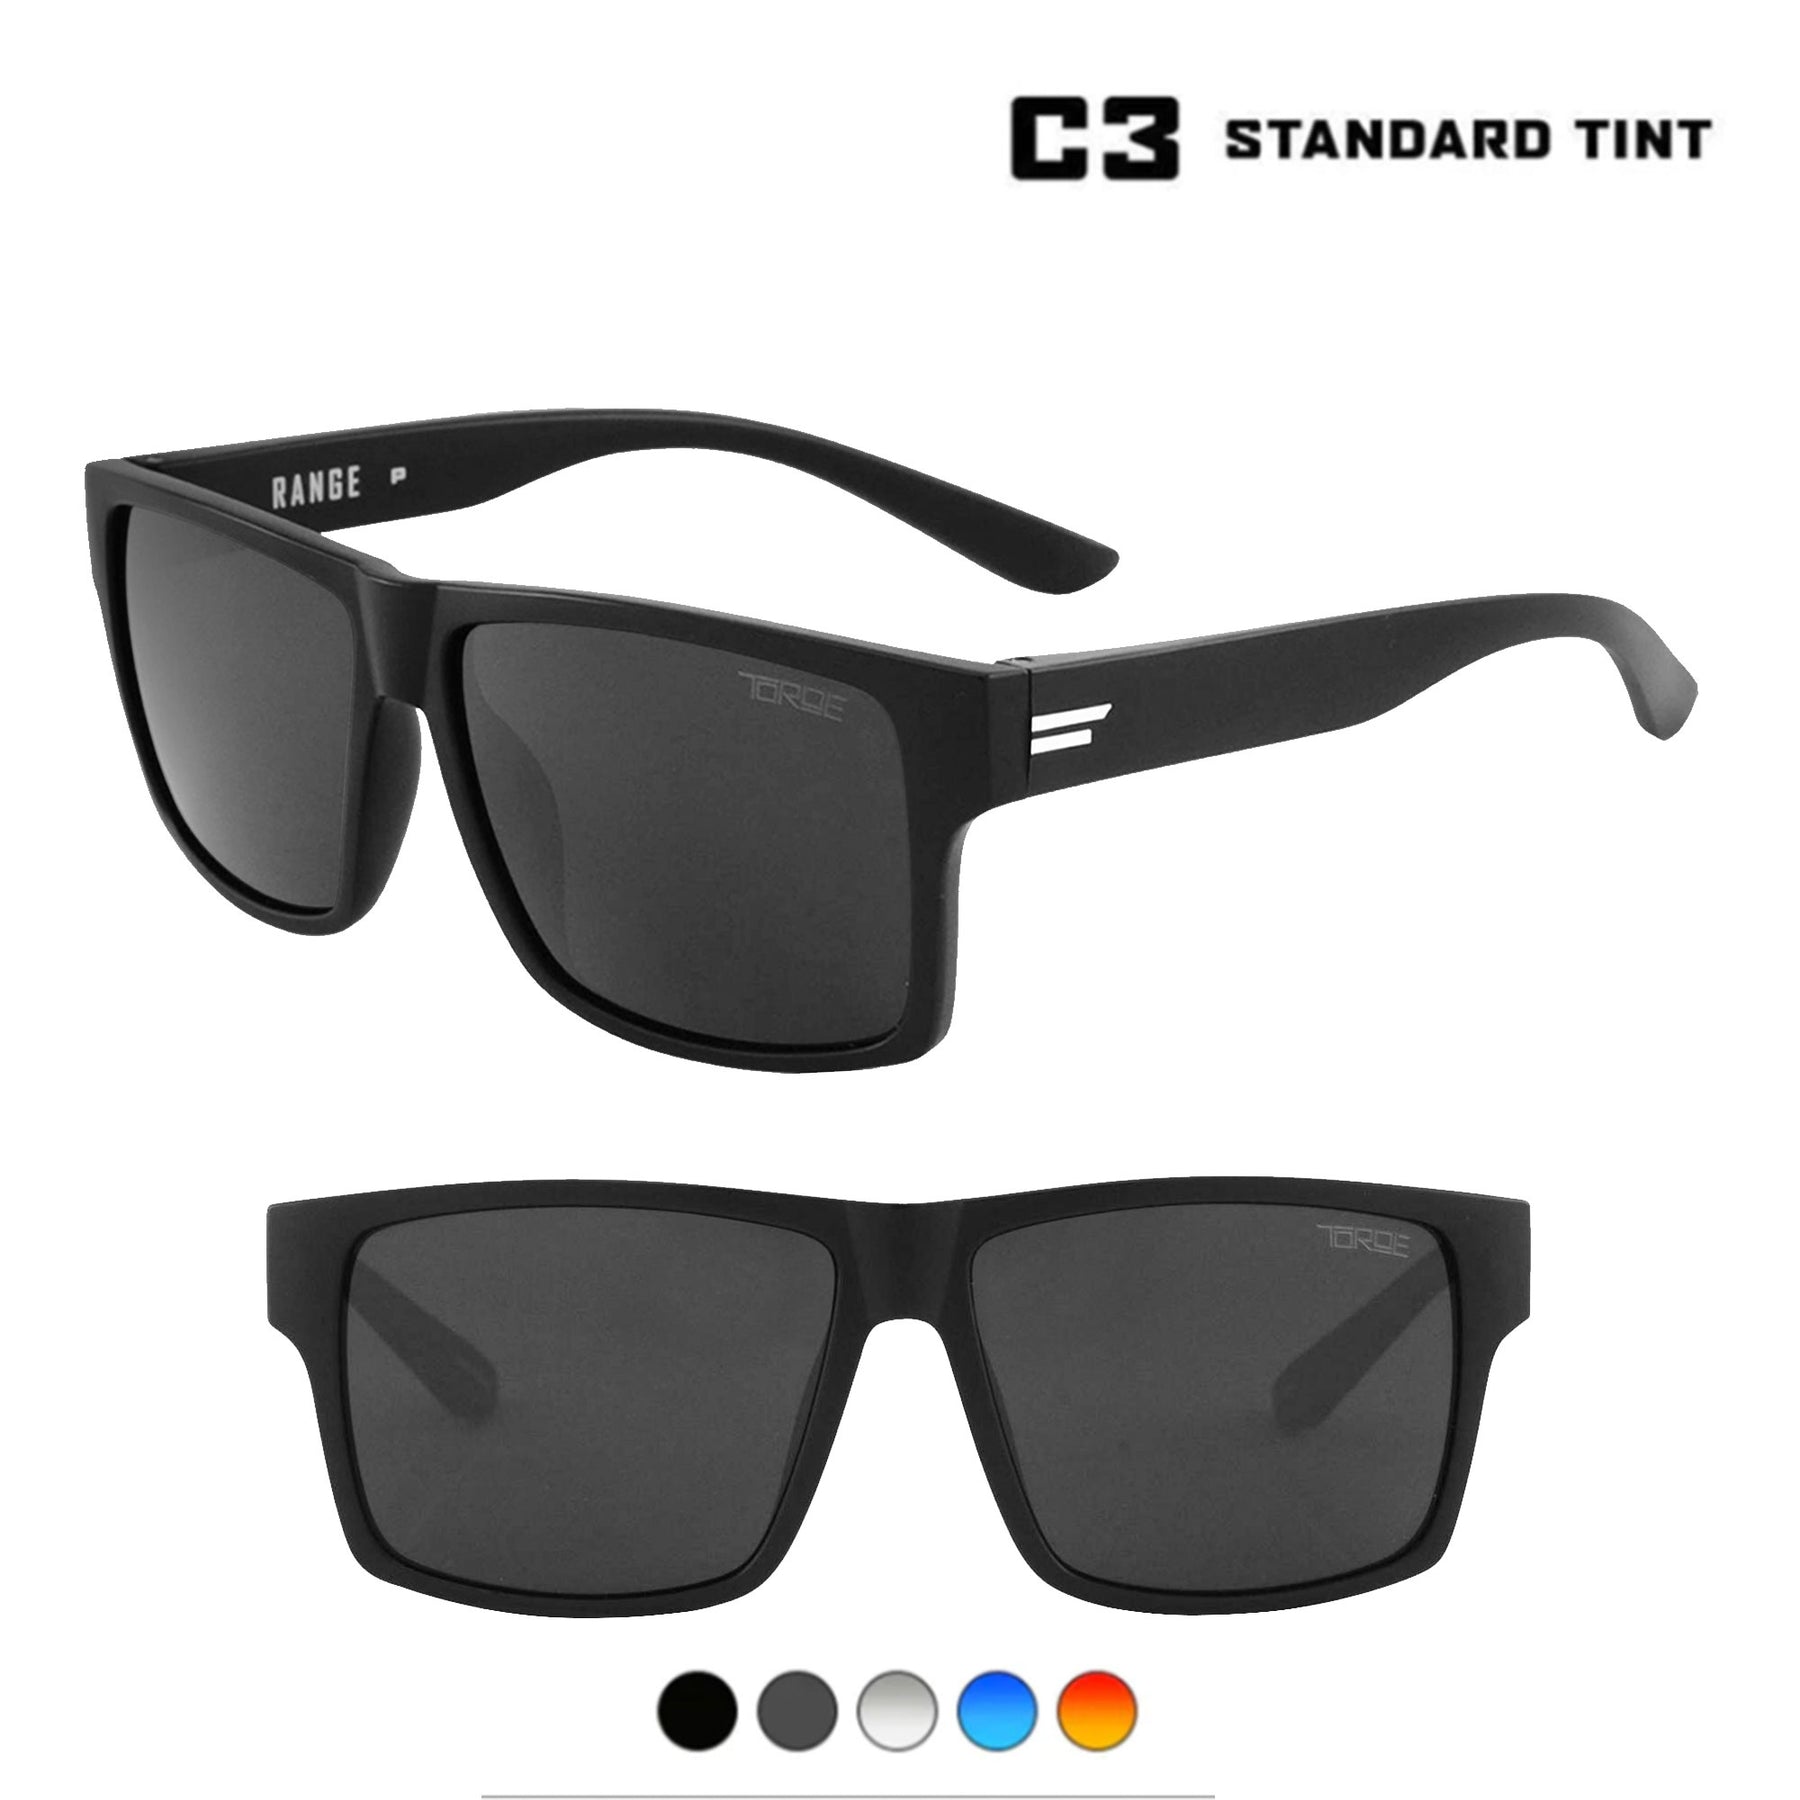 Toroe 'Range' Polarized Sunglasses with Lifetime Warranty Matte Black / Black / Purple